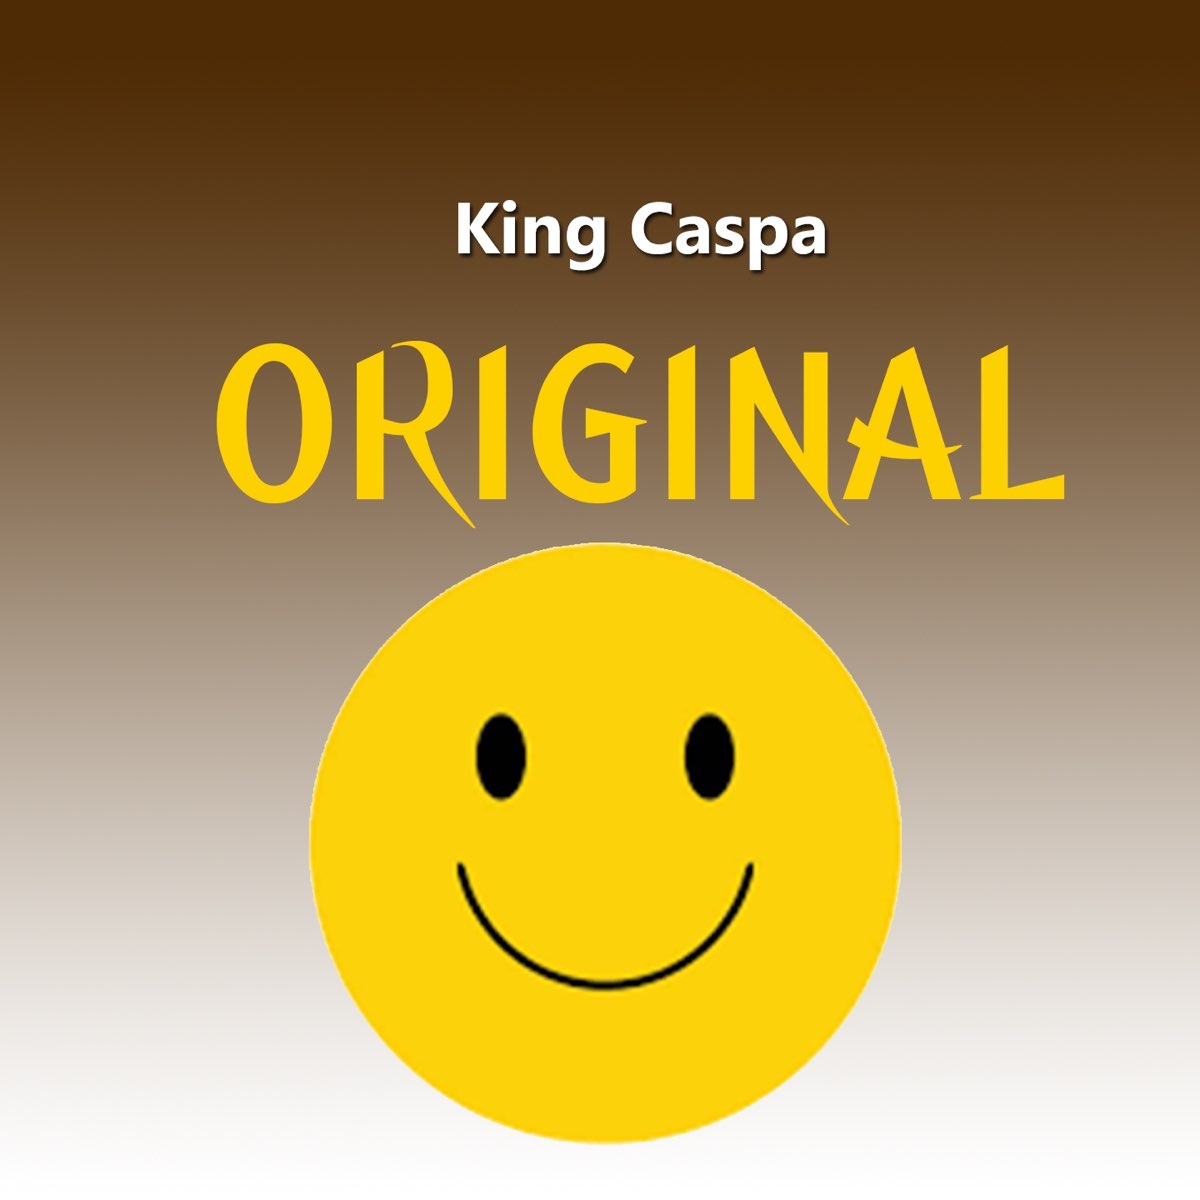 Cap cut - Single - Album by king caspa - Apple Music